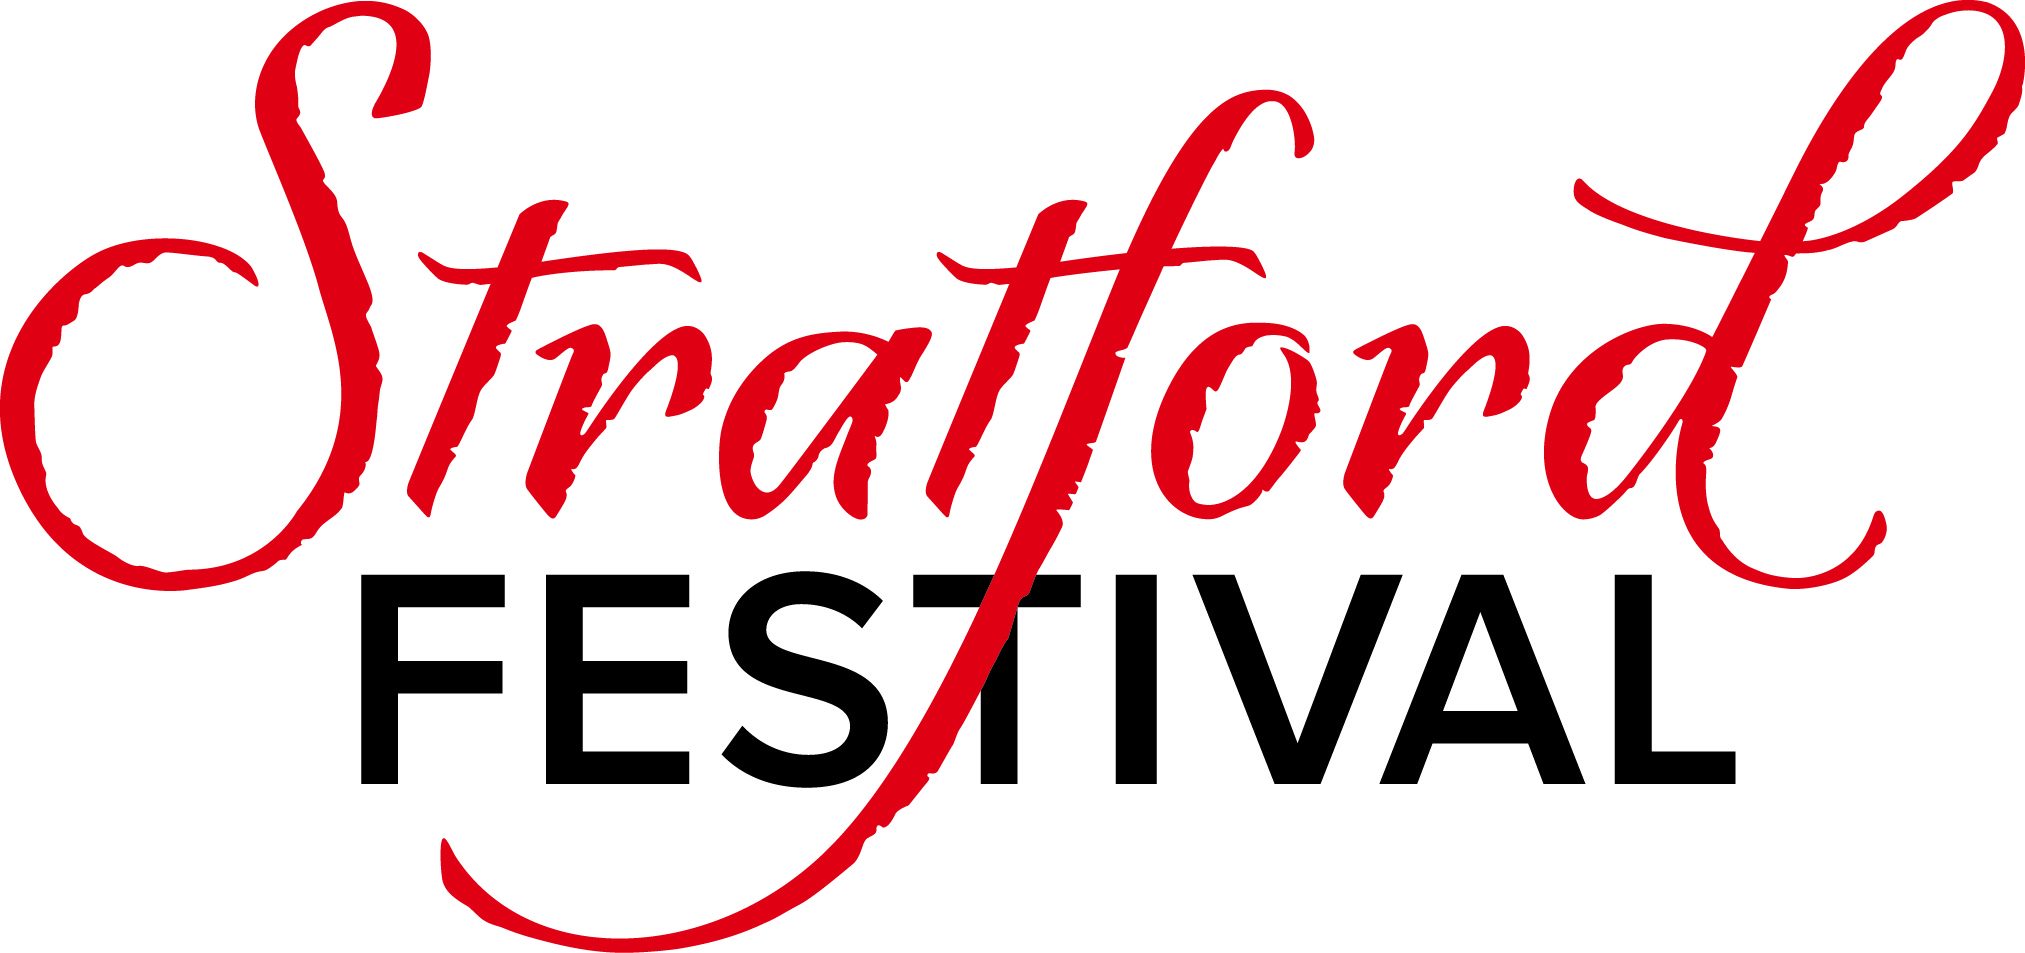 Stratford Festival wordmark - Stratford is written in red cursive text, Festival in black sans-serif text.